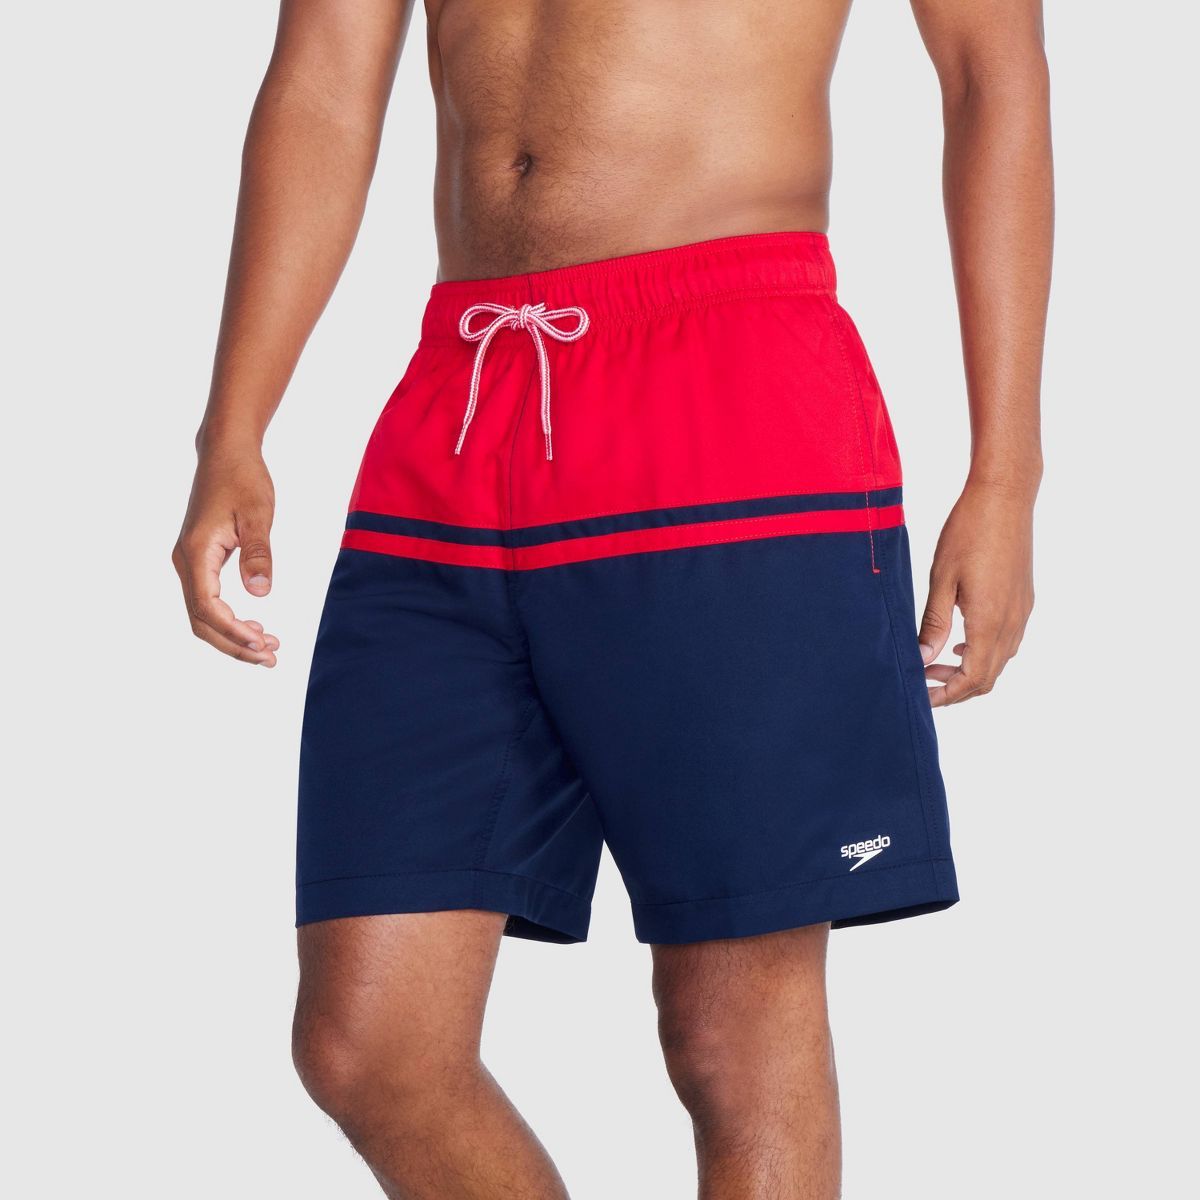 Speedo Men's 7" Colorblock Swim Shorts - Red/Blue | Target